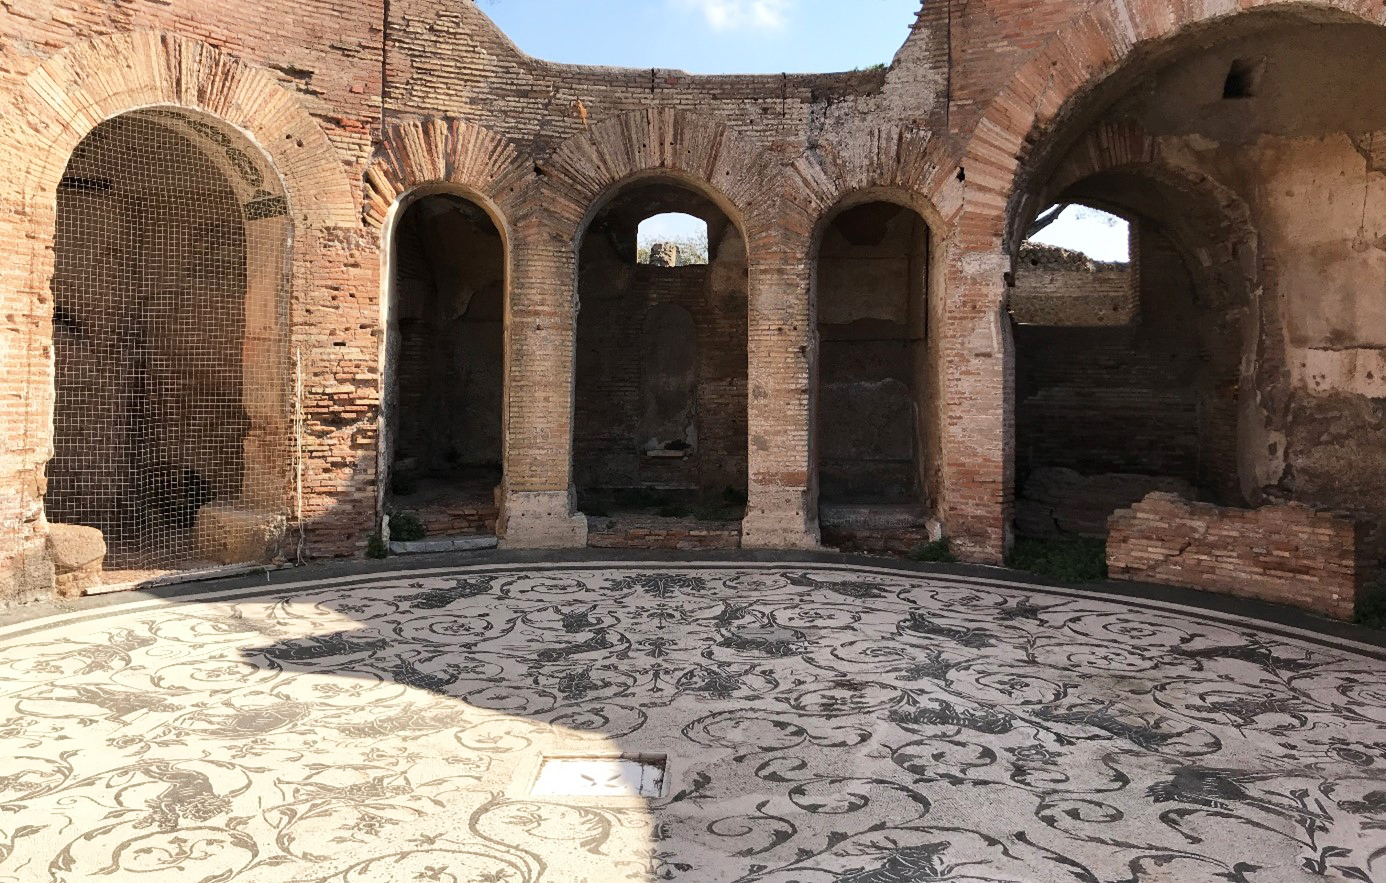 Bild av det runda rummet med golvmosaik i badhuset Terme dei Sette sapienti i Ostia Antica, Rom. Valvbågar i tegel, arkader runt det dekorerade golvet av mosaik.